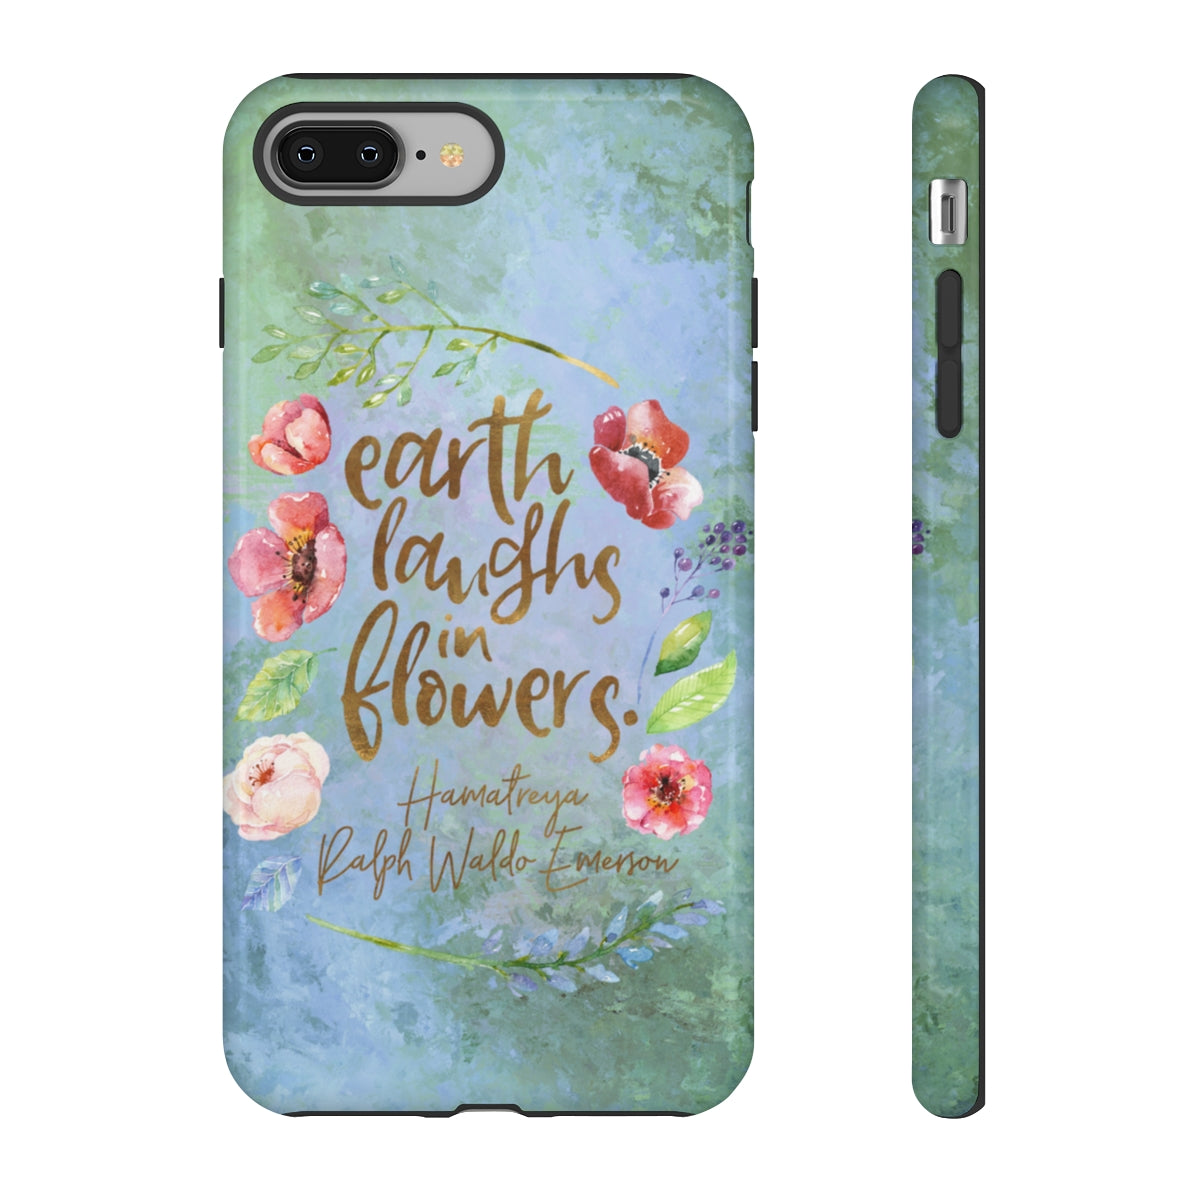 Earth laughs... Ralph Waldo Emerson Phone Case - Literary Lifestyle Company